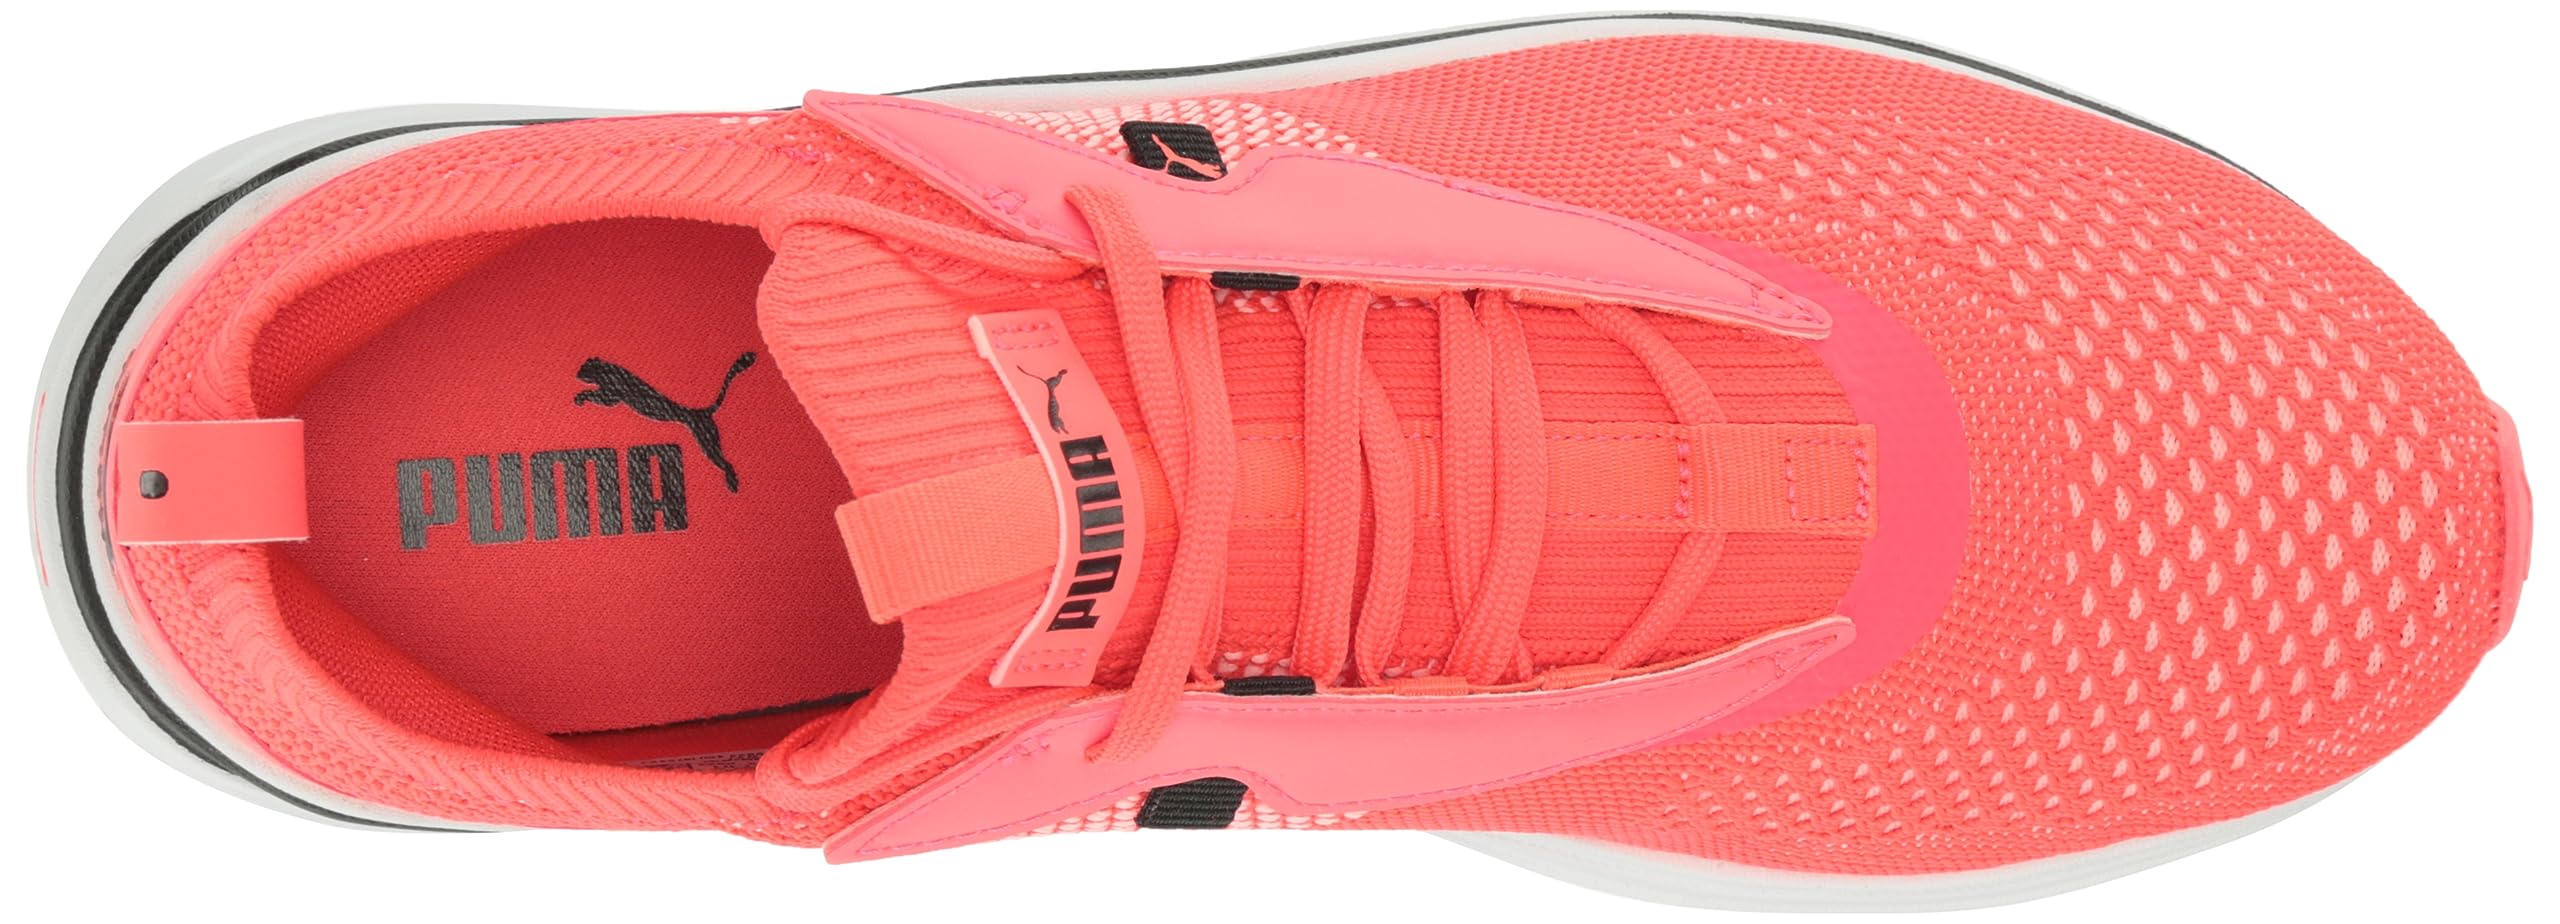 PUMA Women's Softride Stakd Premium WNS Sneaker